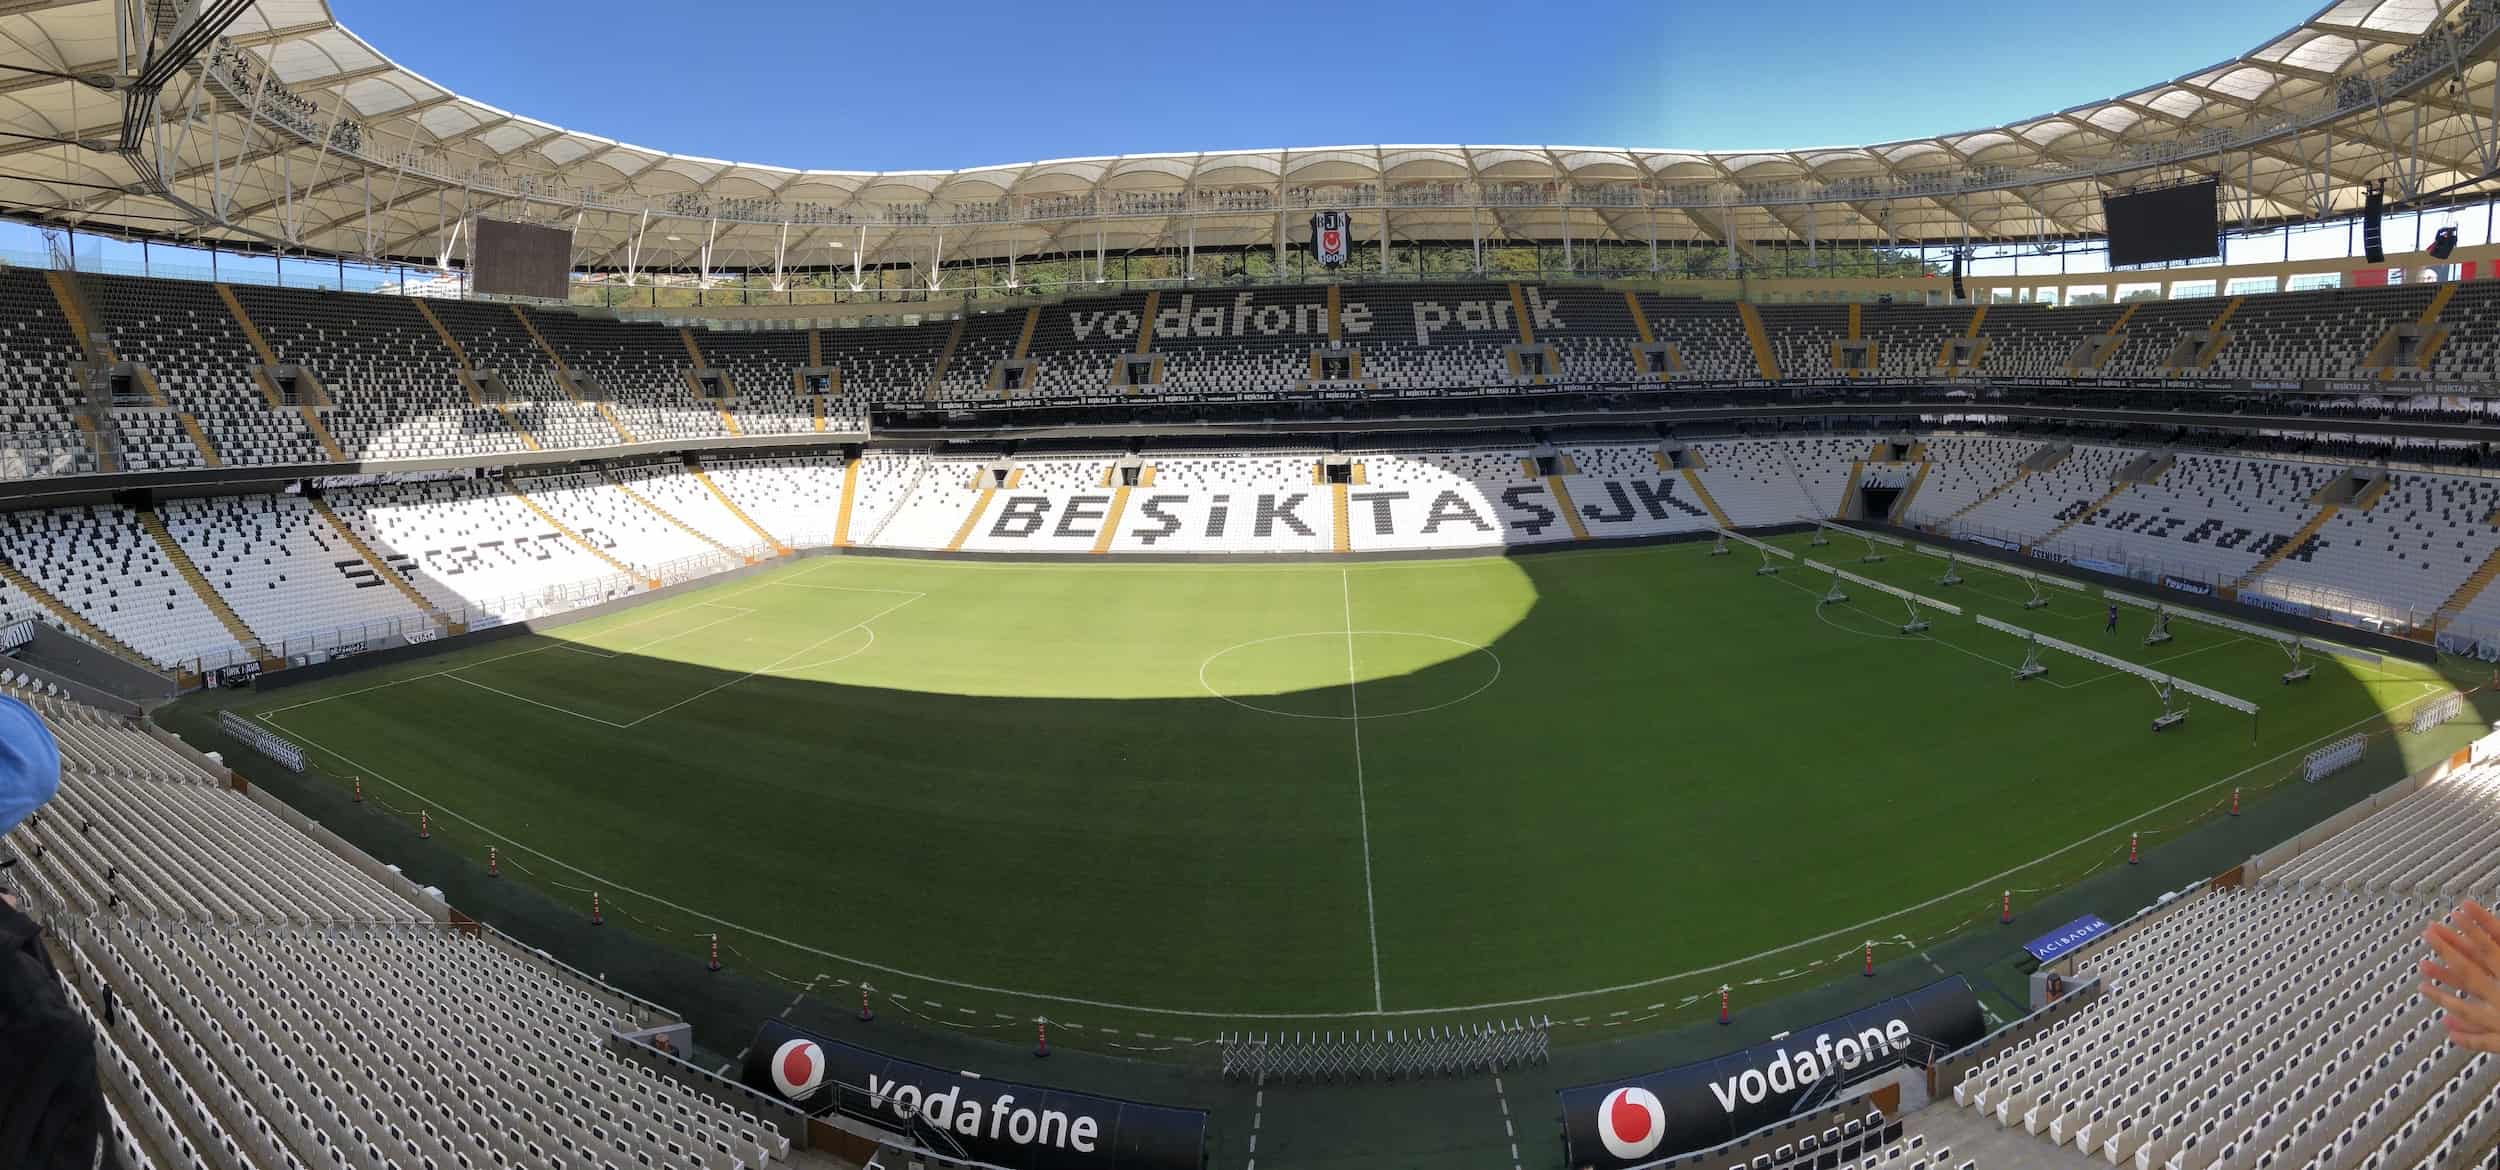 Beşiktaş Stadium in Istanbul, Turkey